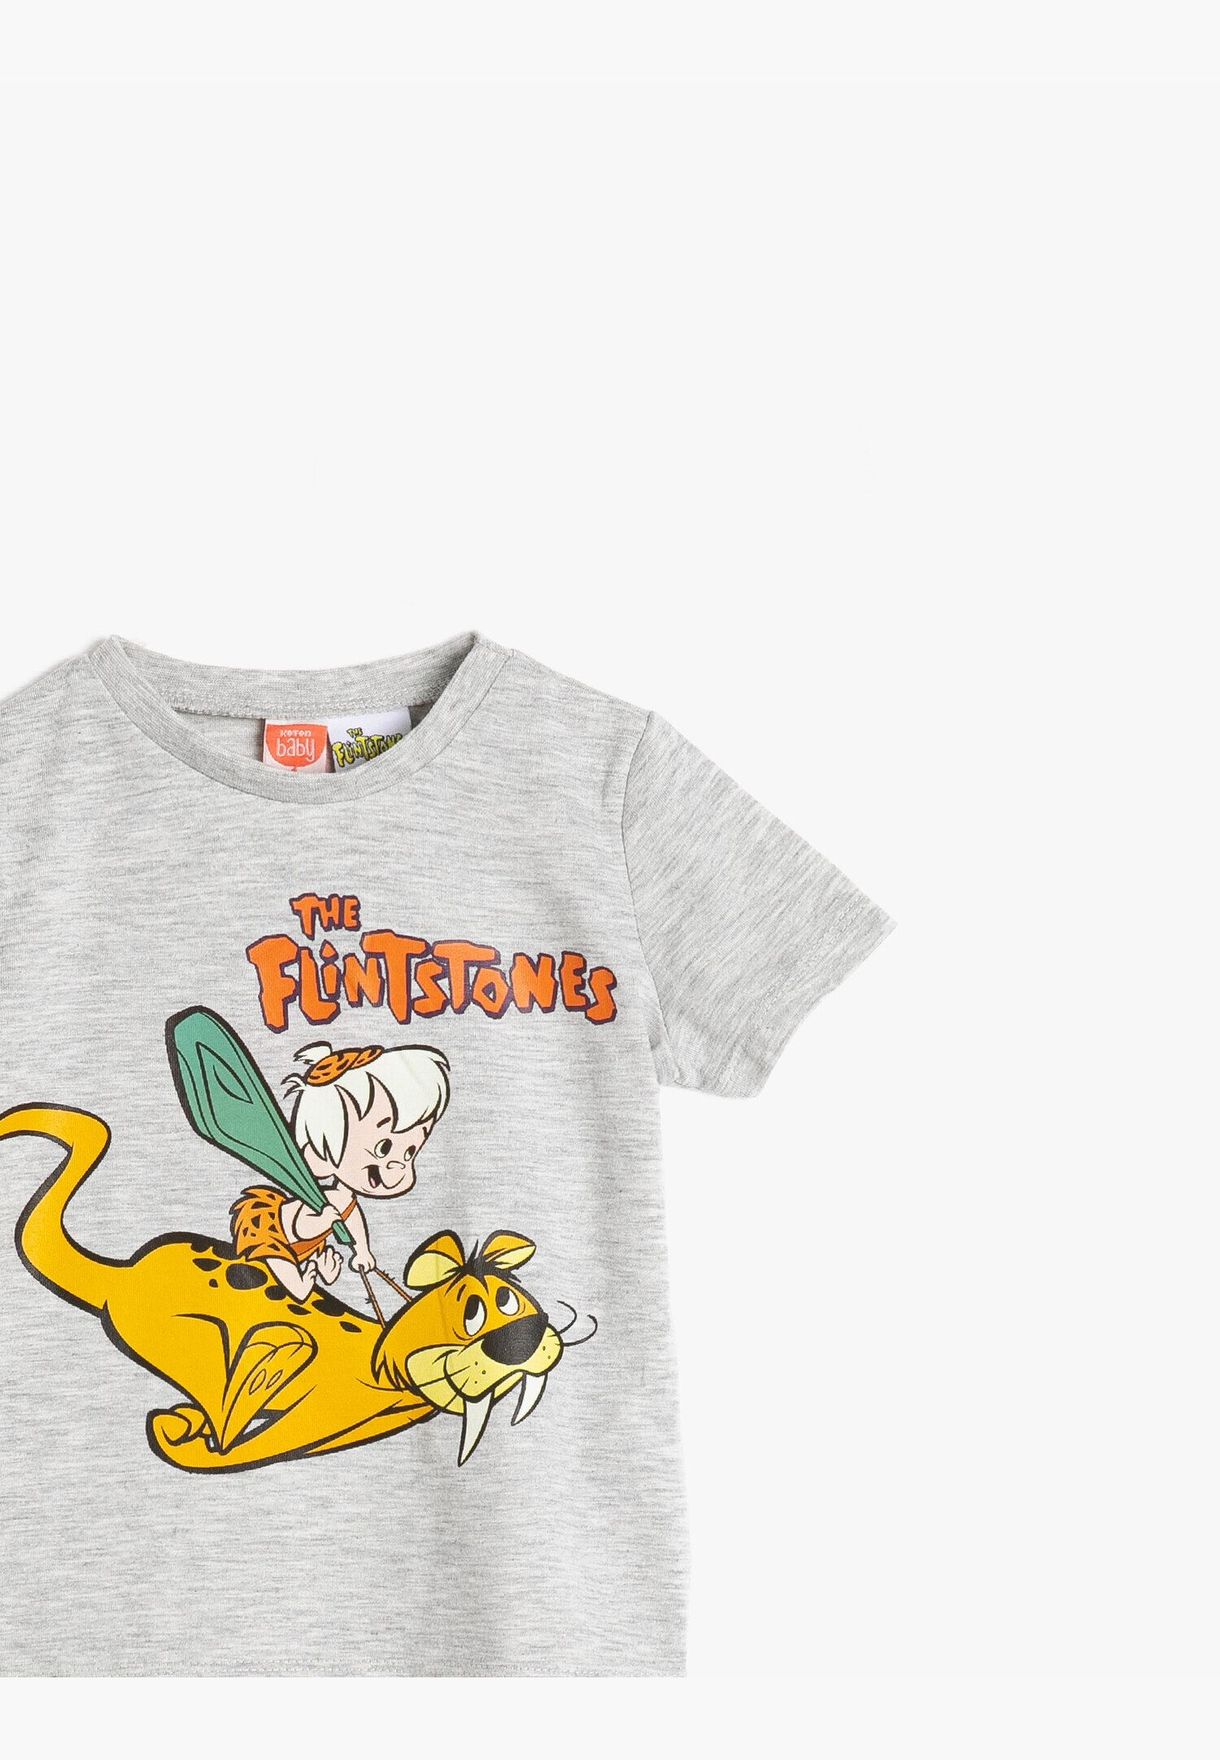 The Flintstones Licensed Printed Short Sleeve T-Shirt